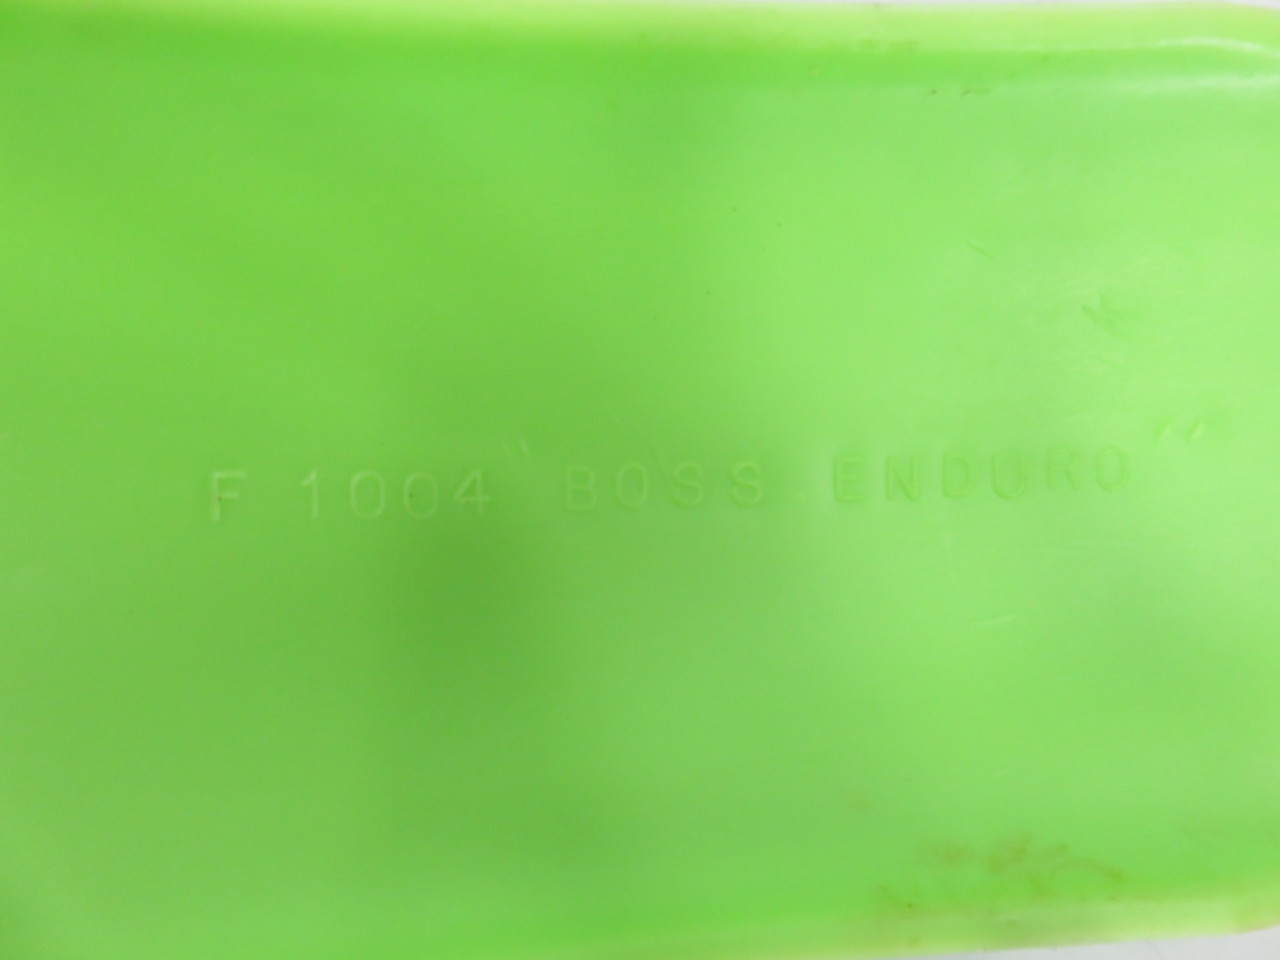 Boss Enduro Fender F1004 Fender cSc Green Montesa Vintage